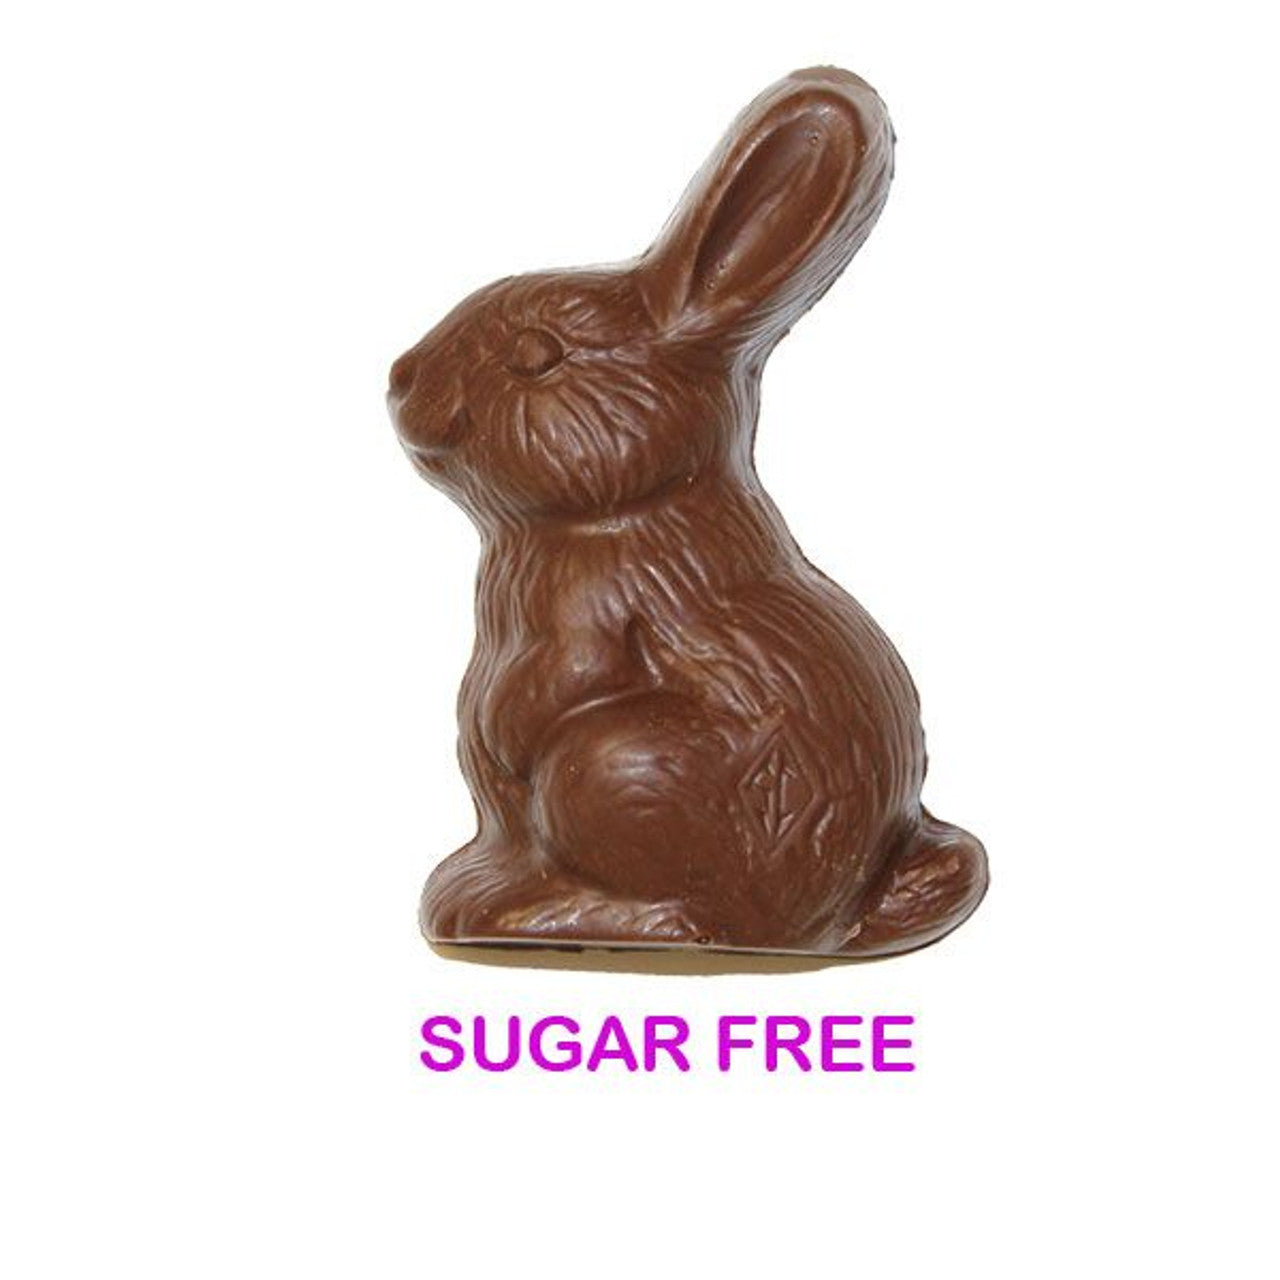 Gardner's Solid Chocolate Bunny Sugar Free - 3oz